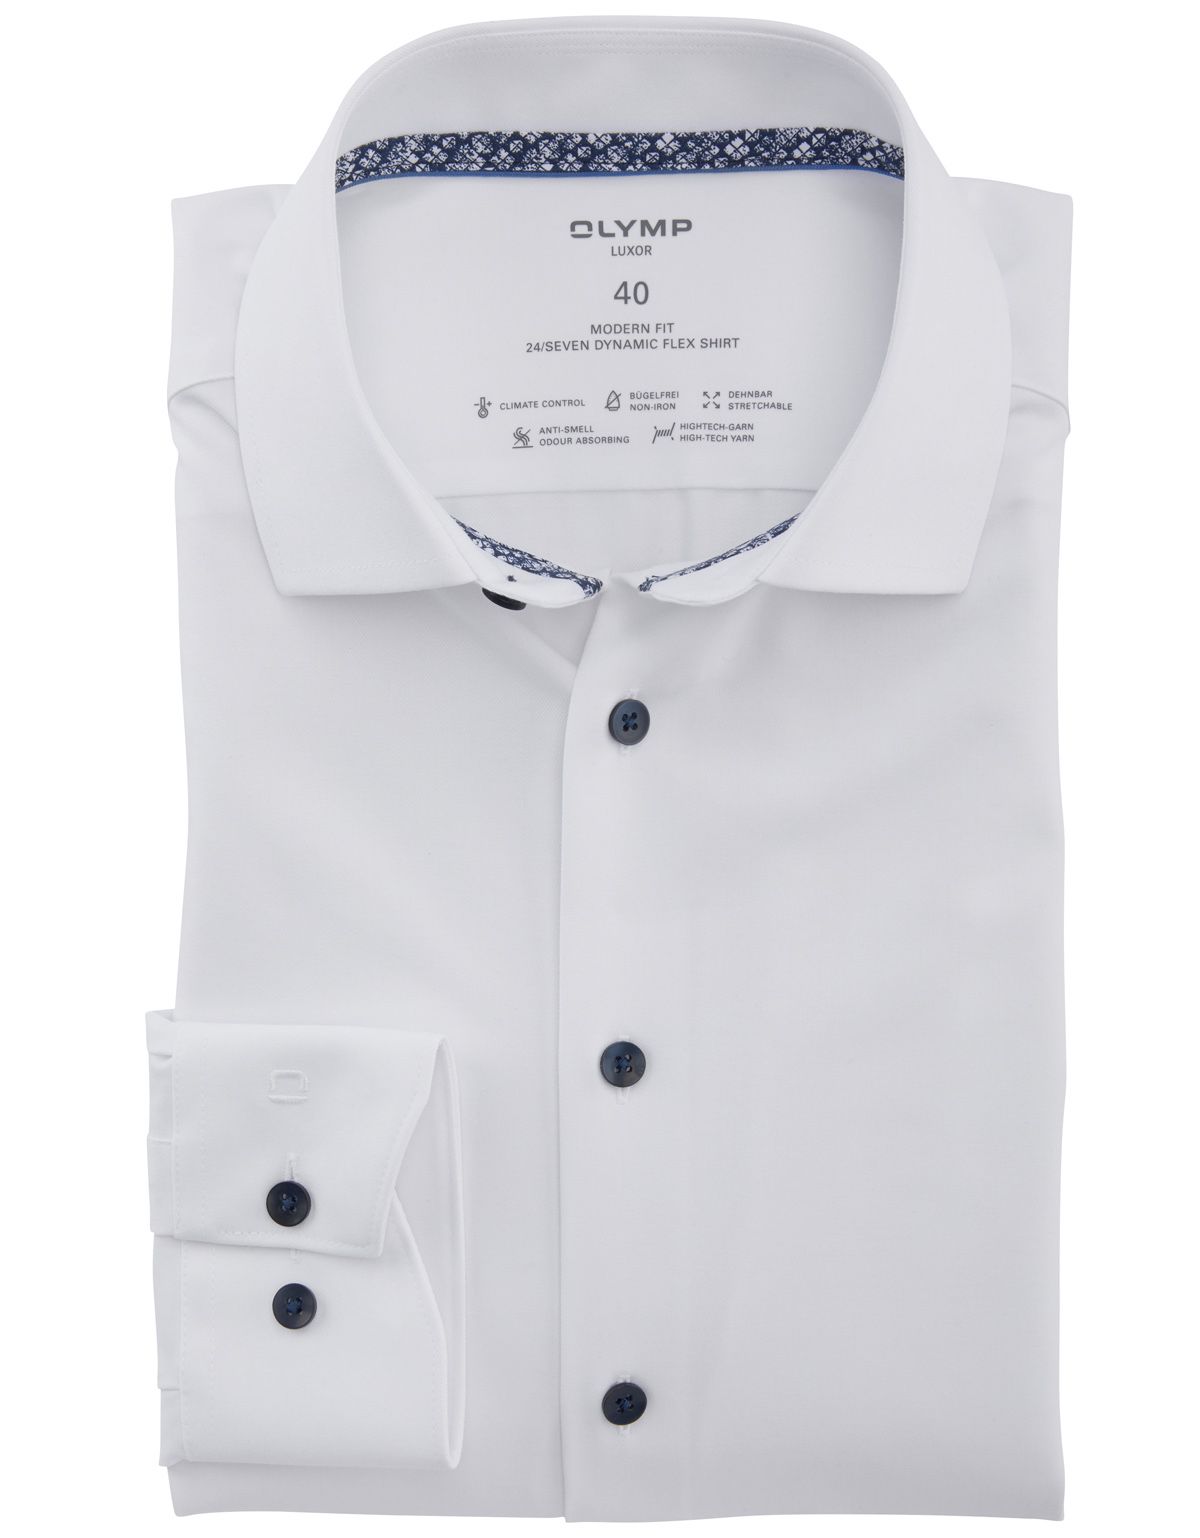 Рубашка мужская OLYMP Luxor 24/7 климат-контроль, modern fit[Белый]